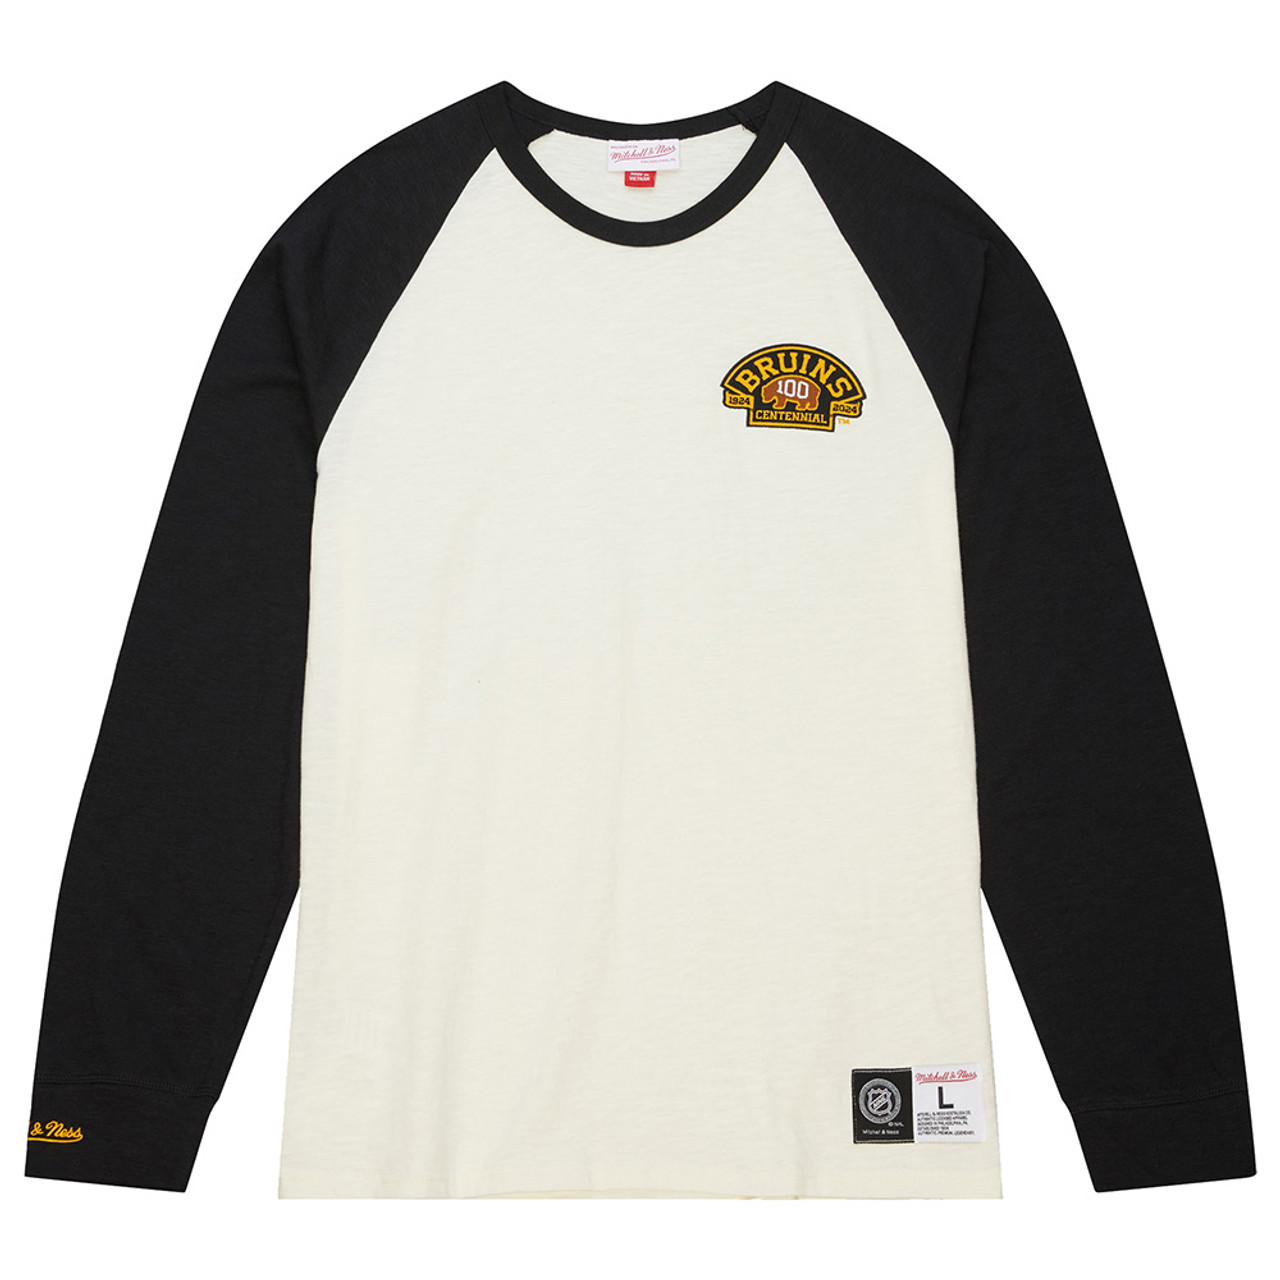 Mitchell & Ness Boston Red Sox MLB XL Logo Vintage Premium Men's T-Shirt